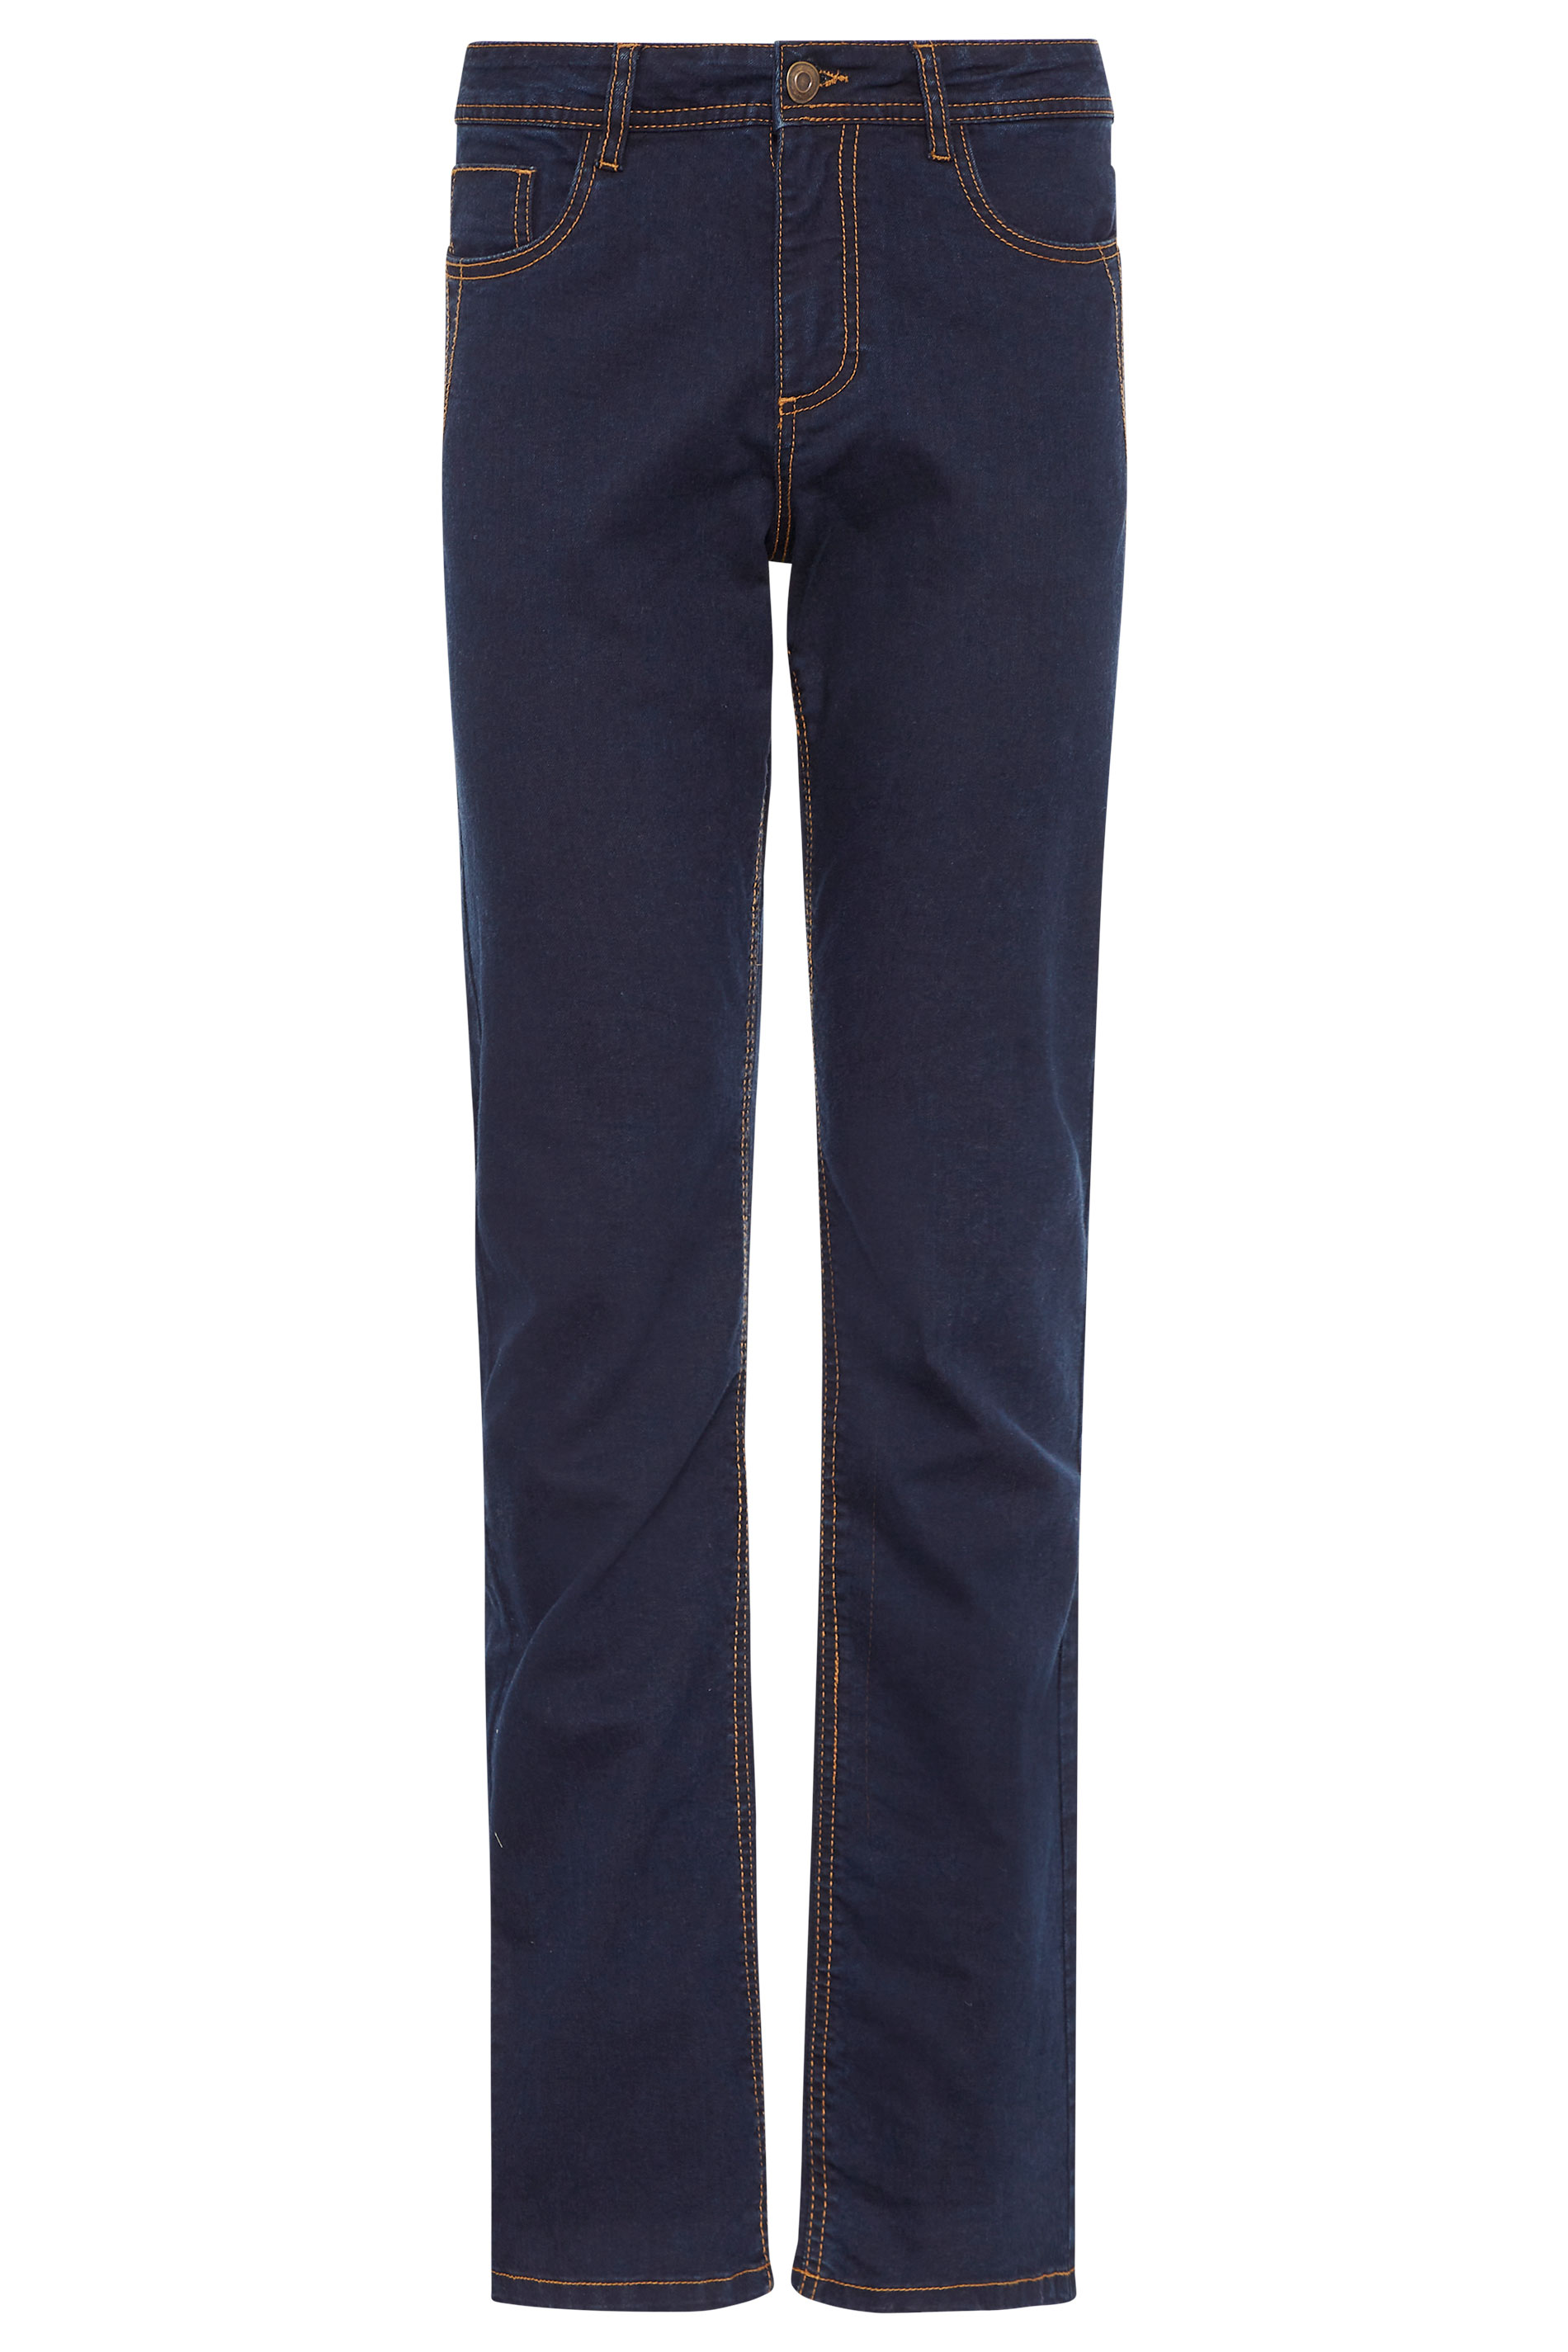 LTS Tall Indigo Blue Stretch Straight Leg Jeans | Long Tall Sally  3